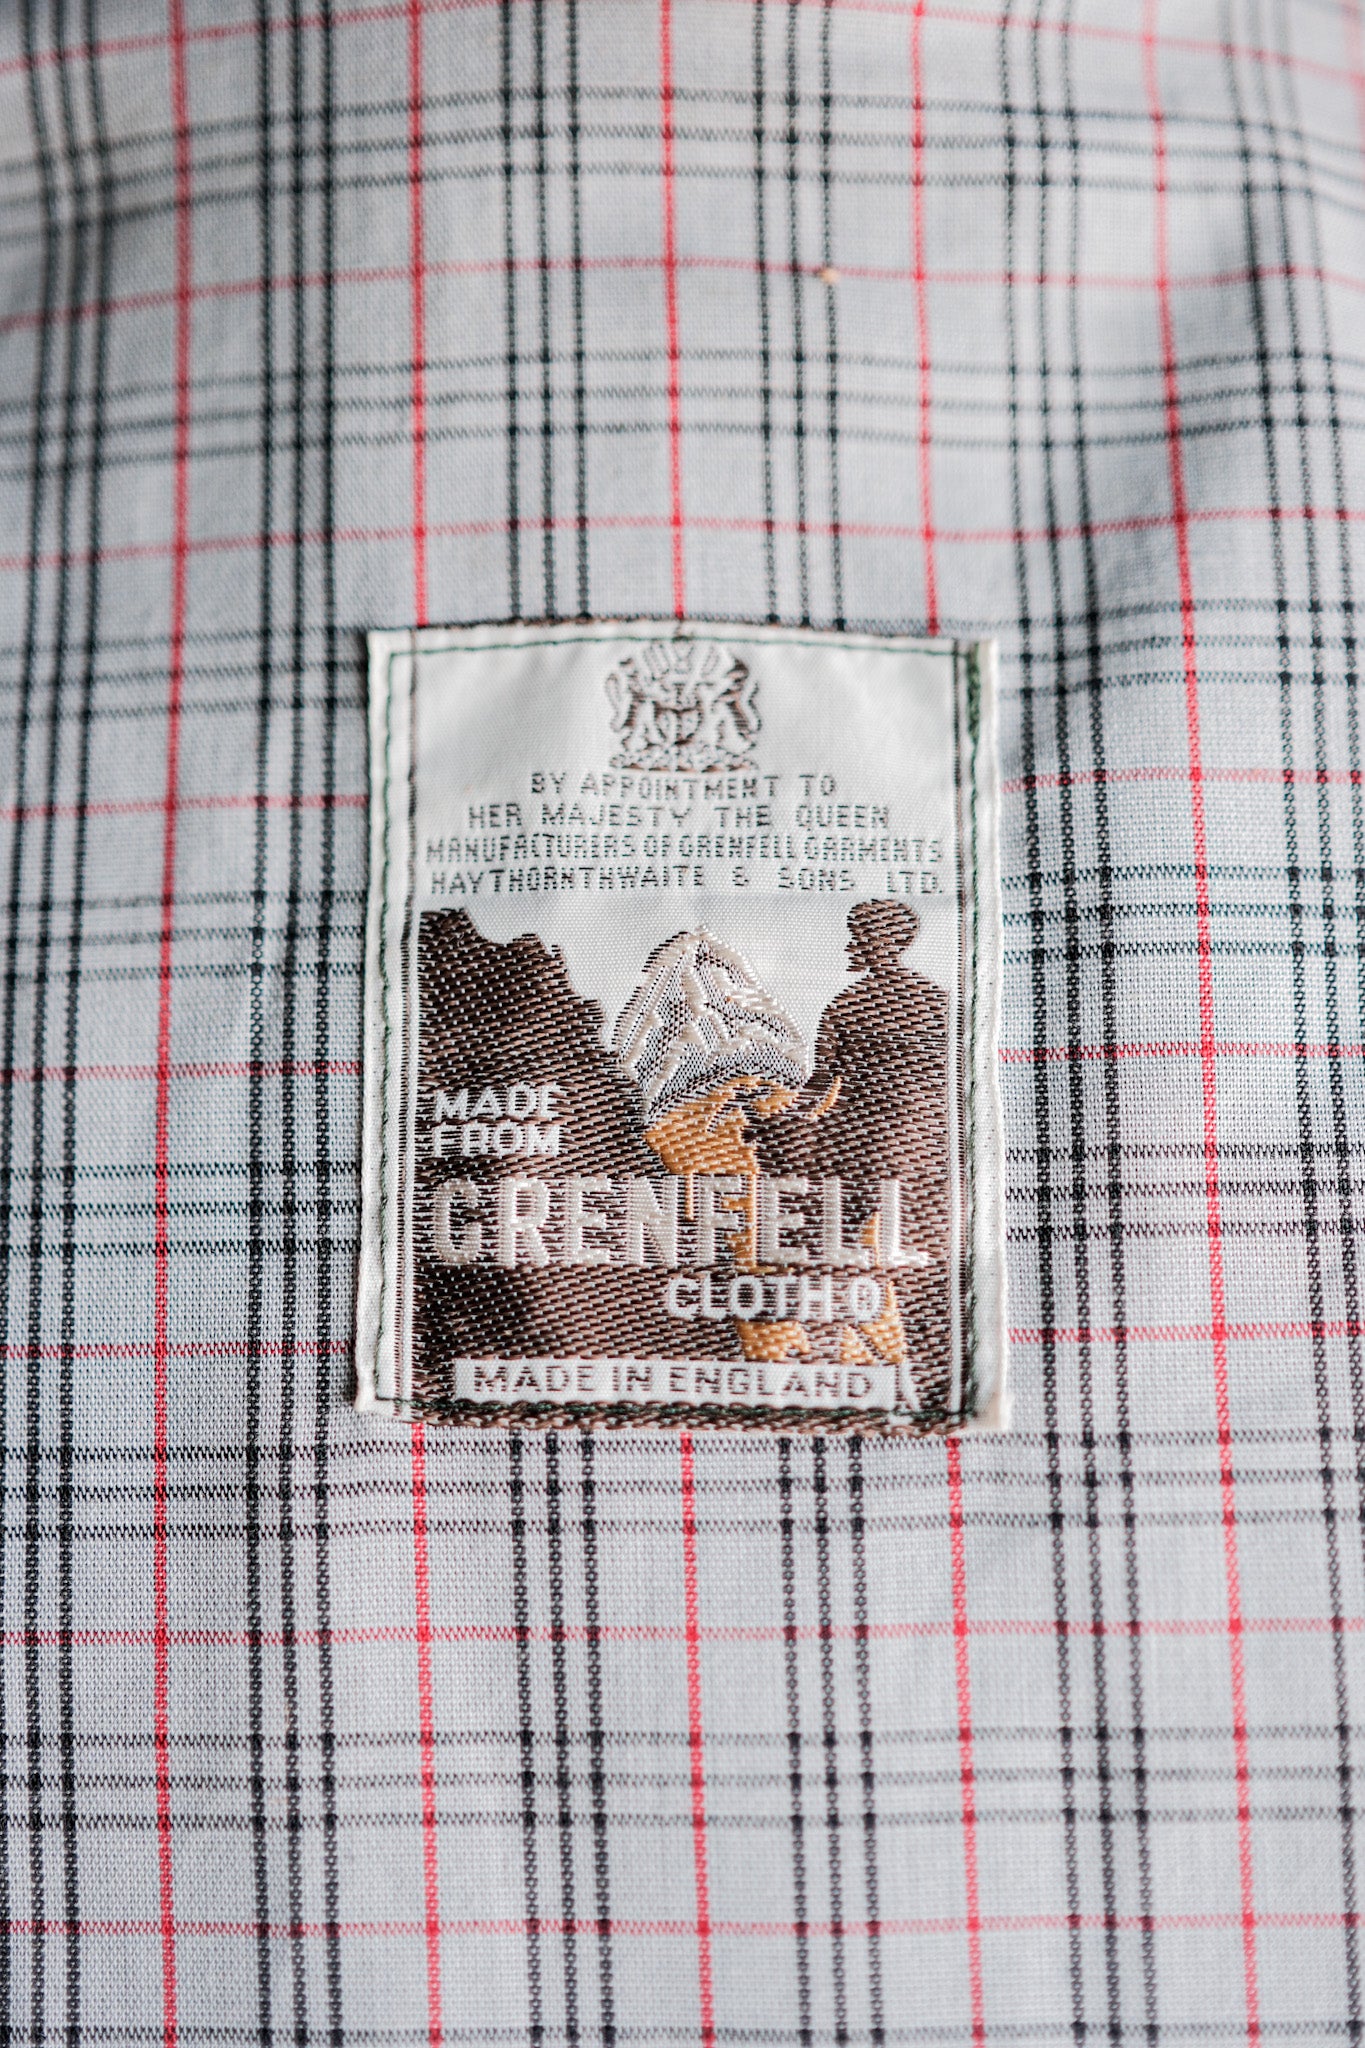 [〜80年代]復古Grenfell Munro夾克尺寸.xl“山地標籤”